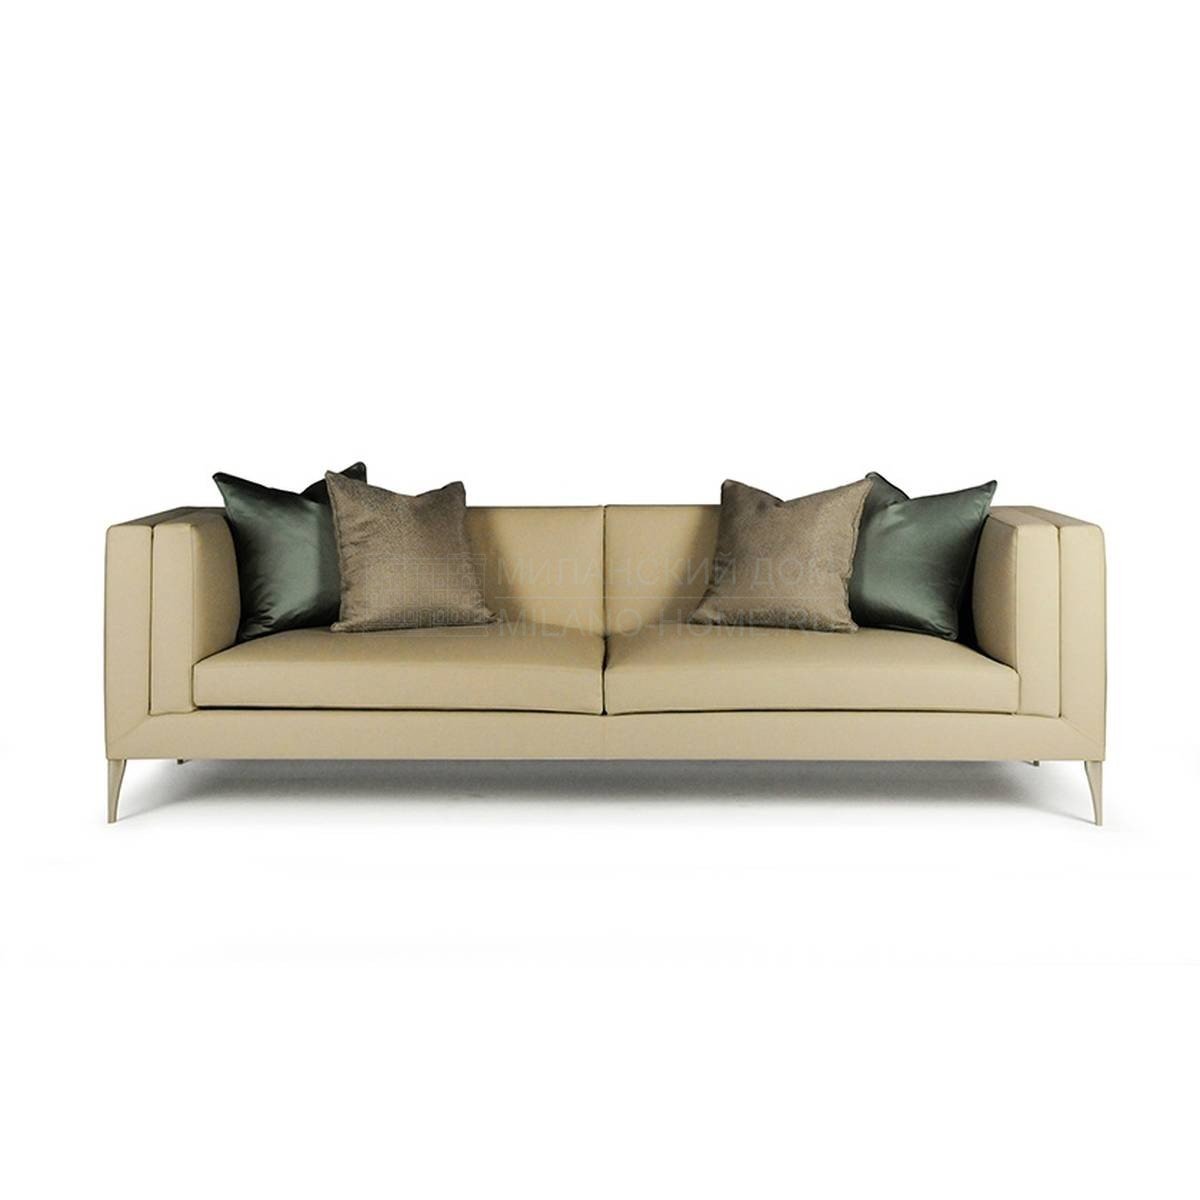 Прямой диван Elegance sofa leather из Италии фабрики PAOLO CASTELLI